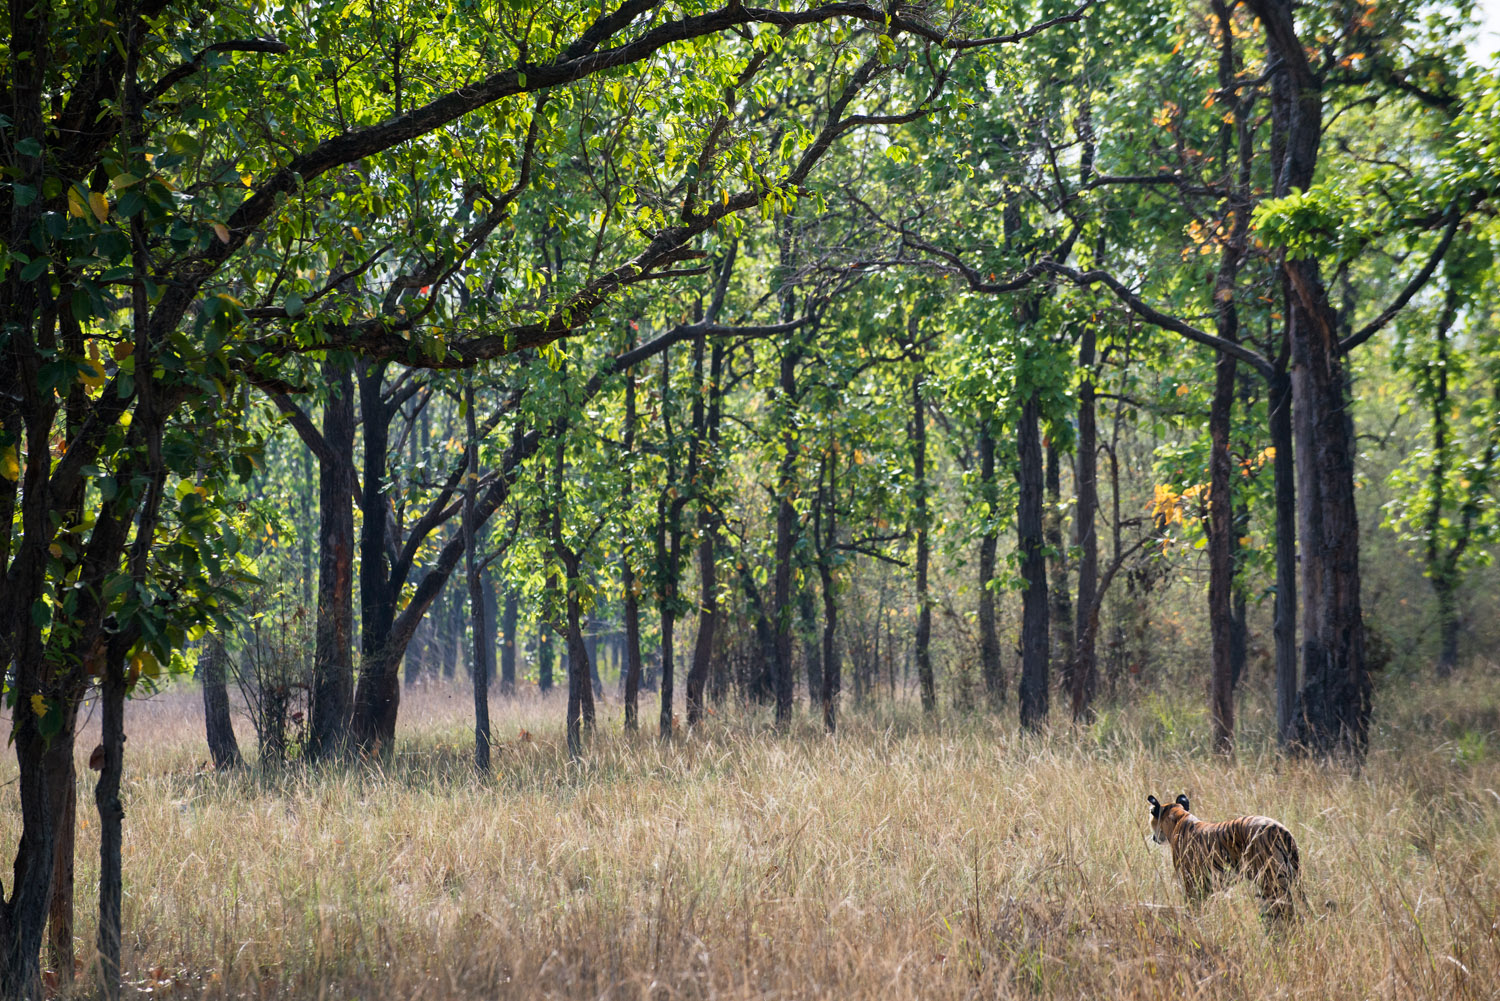 Bengal tigress in sal forest, Bandhavgarh National Park, Madhya Pradesh, India